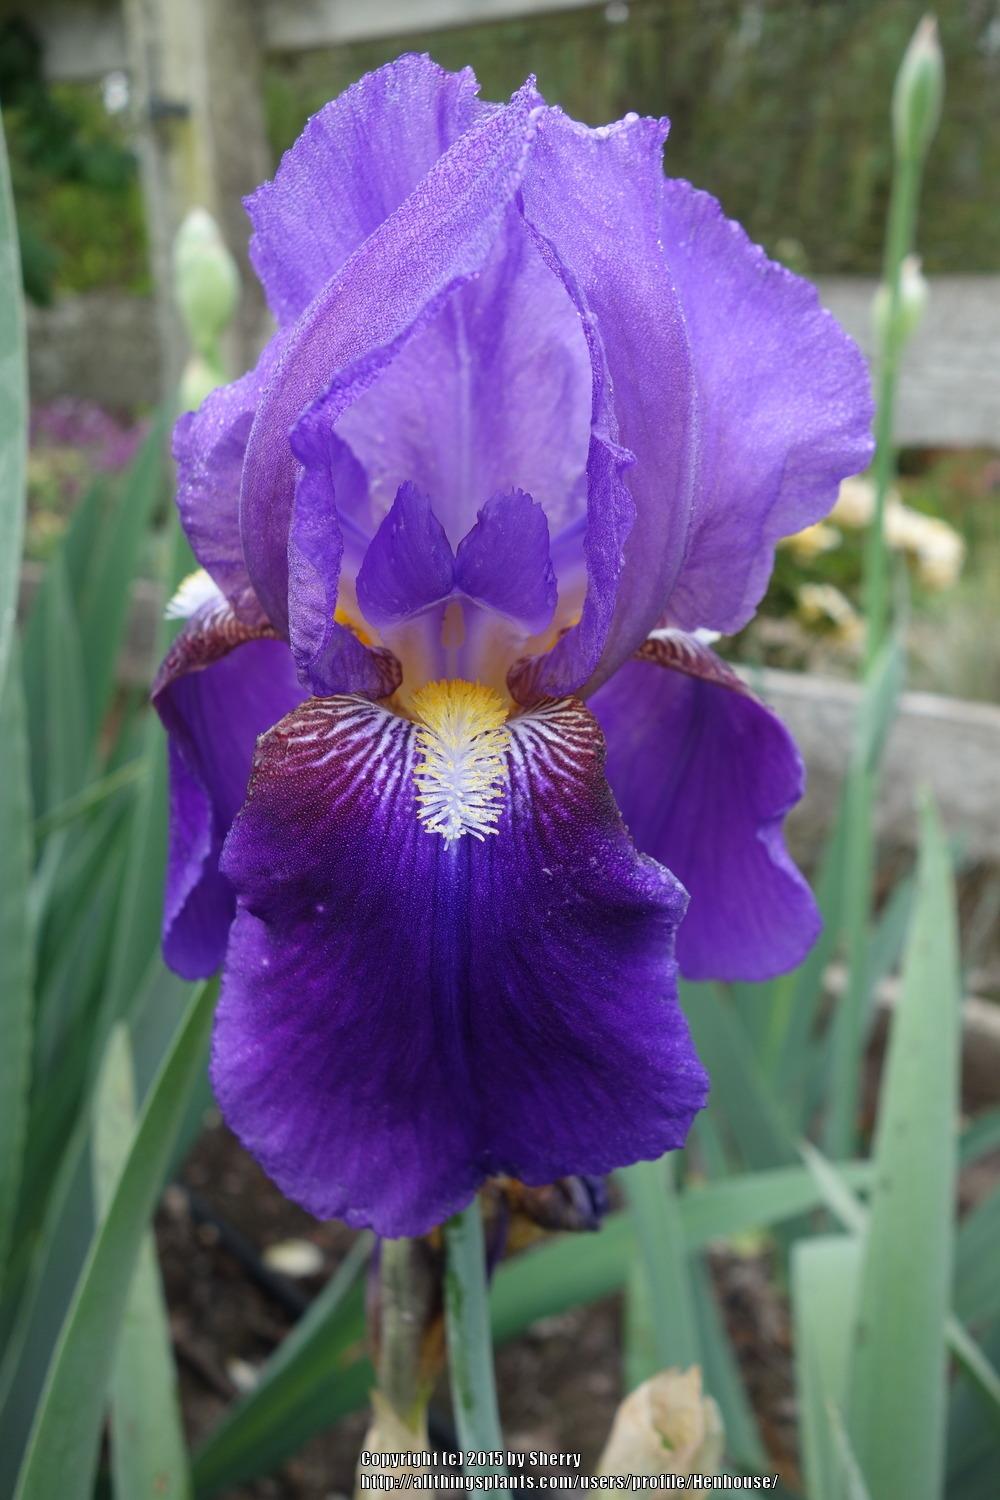 Photo of Tall Bearded Iris (Iris 'William A. Setchell') uploaded by Henhouse